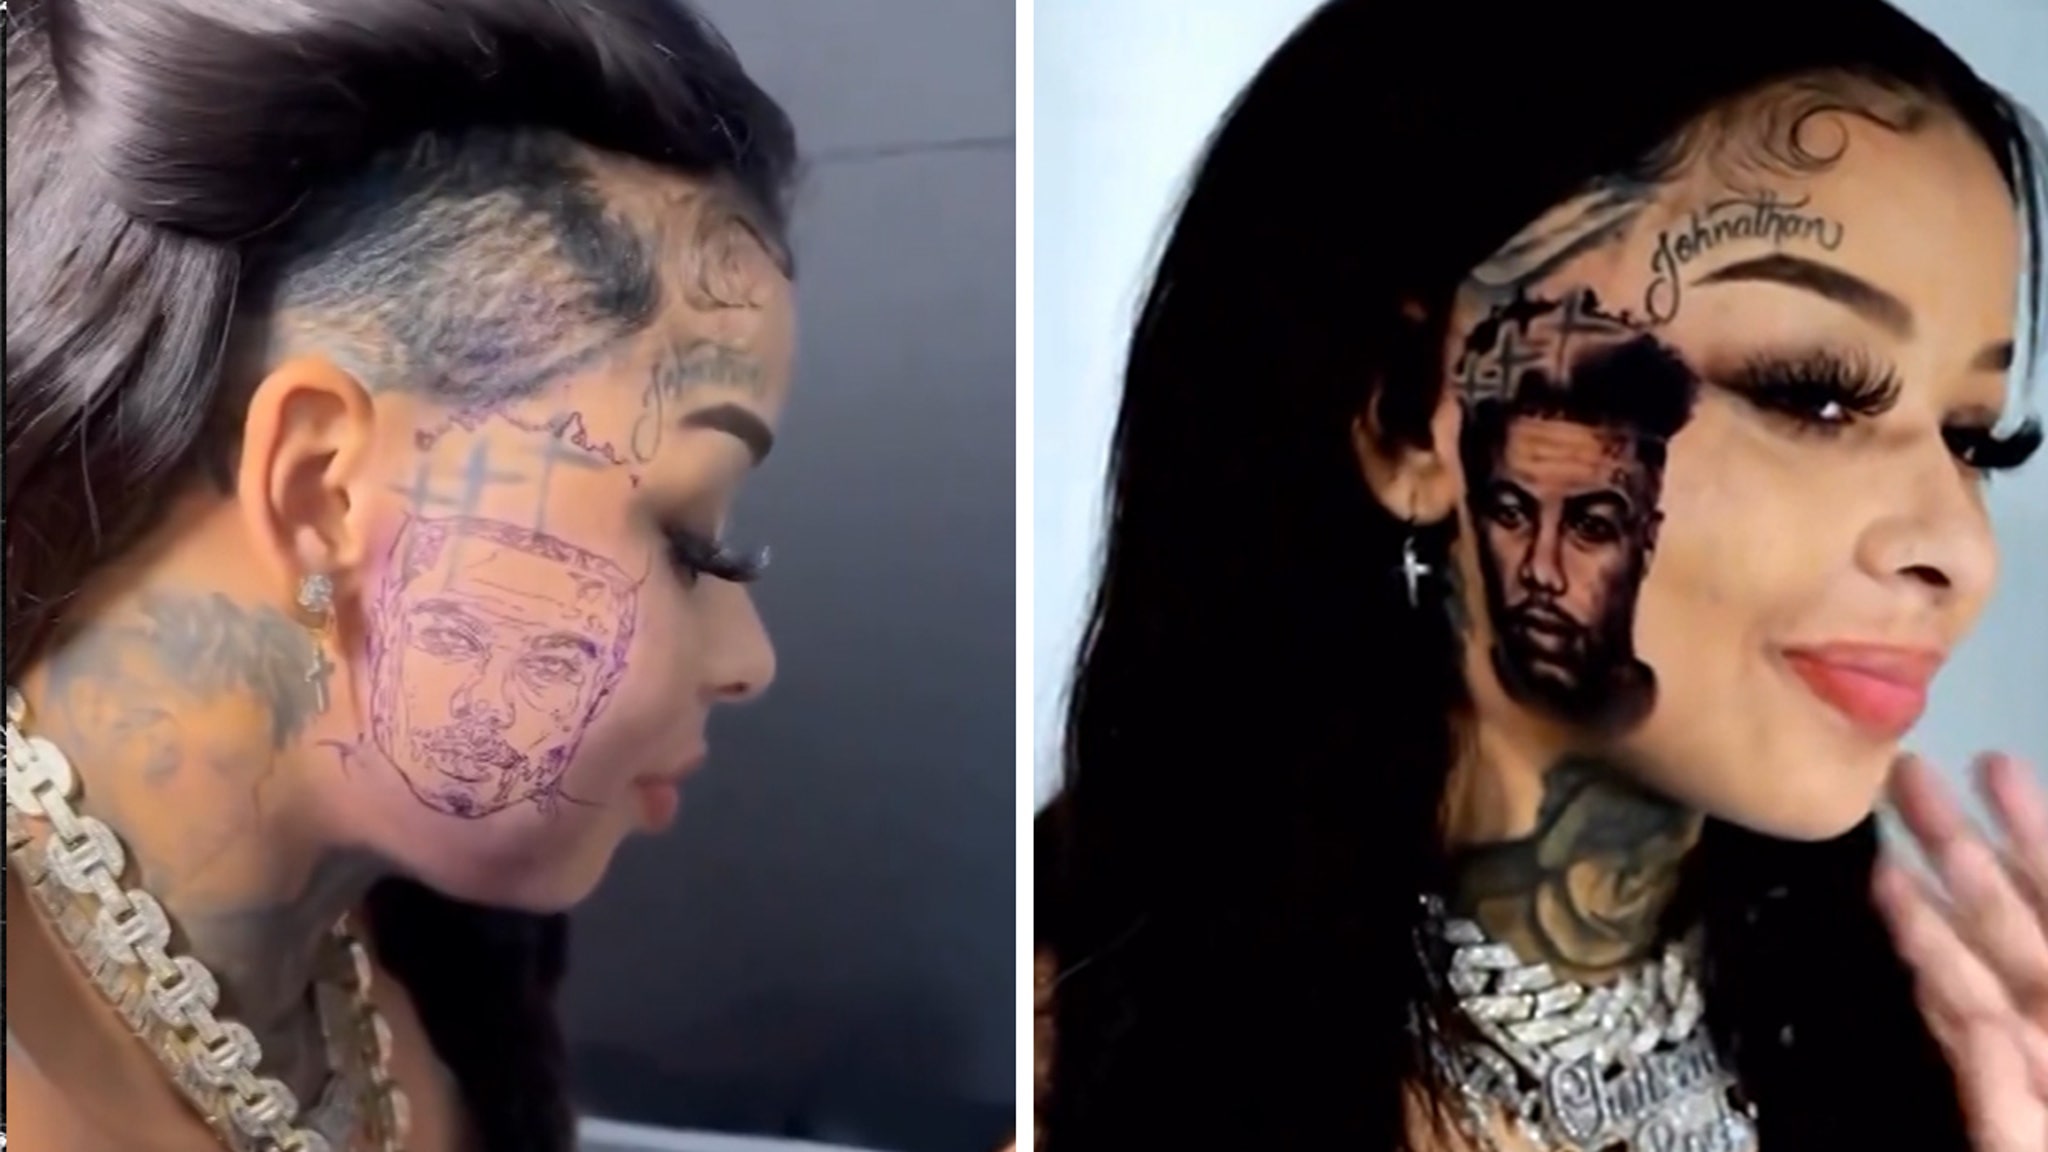 Chrisean Rock Tattoos Blueface Portrait on Her Face